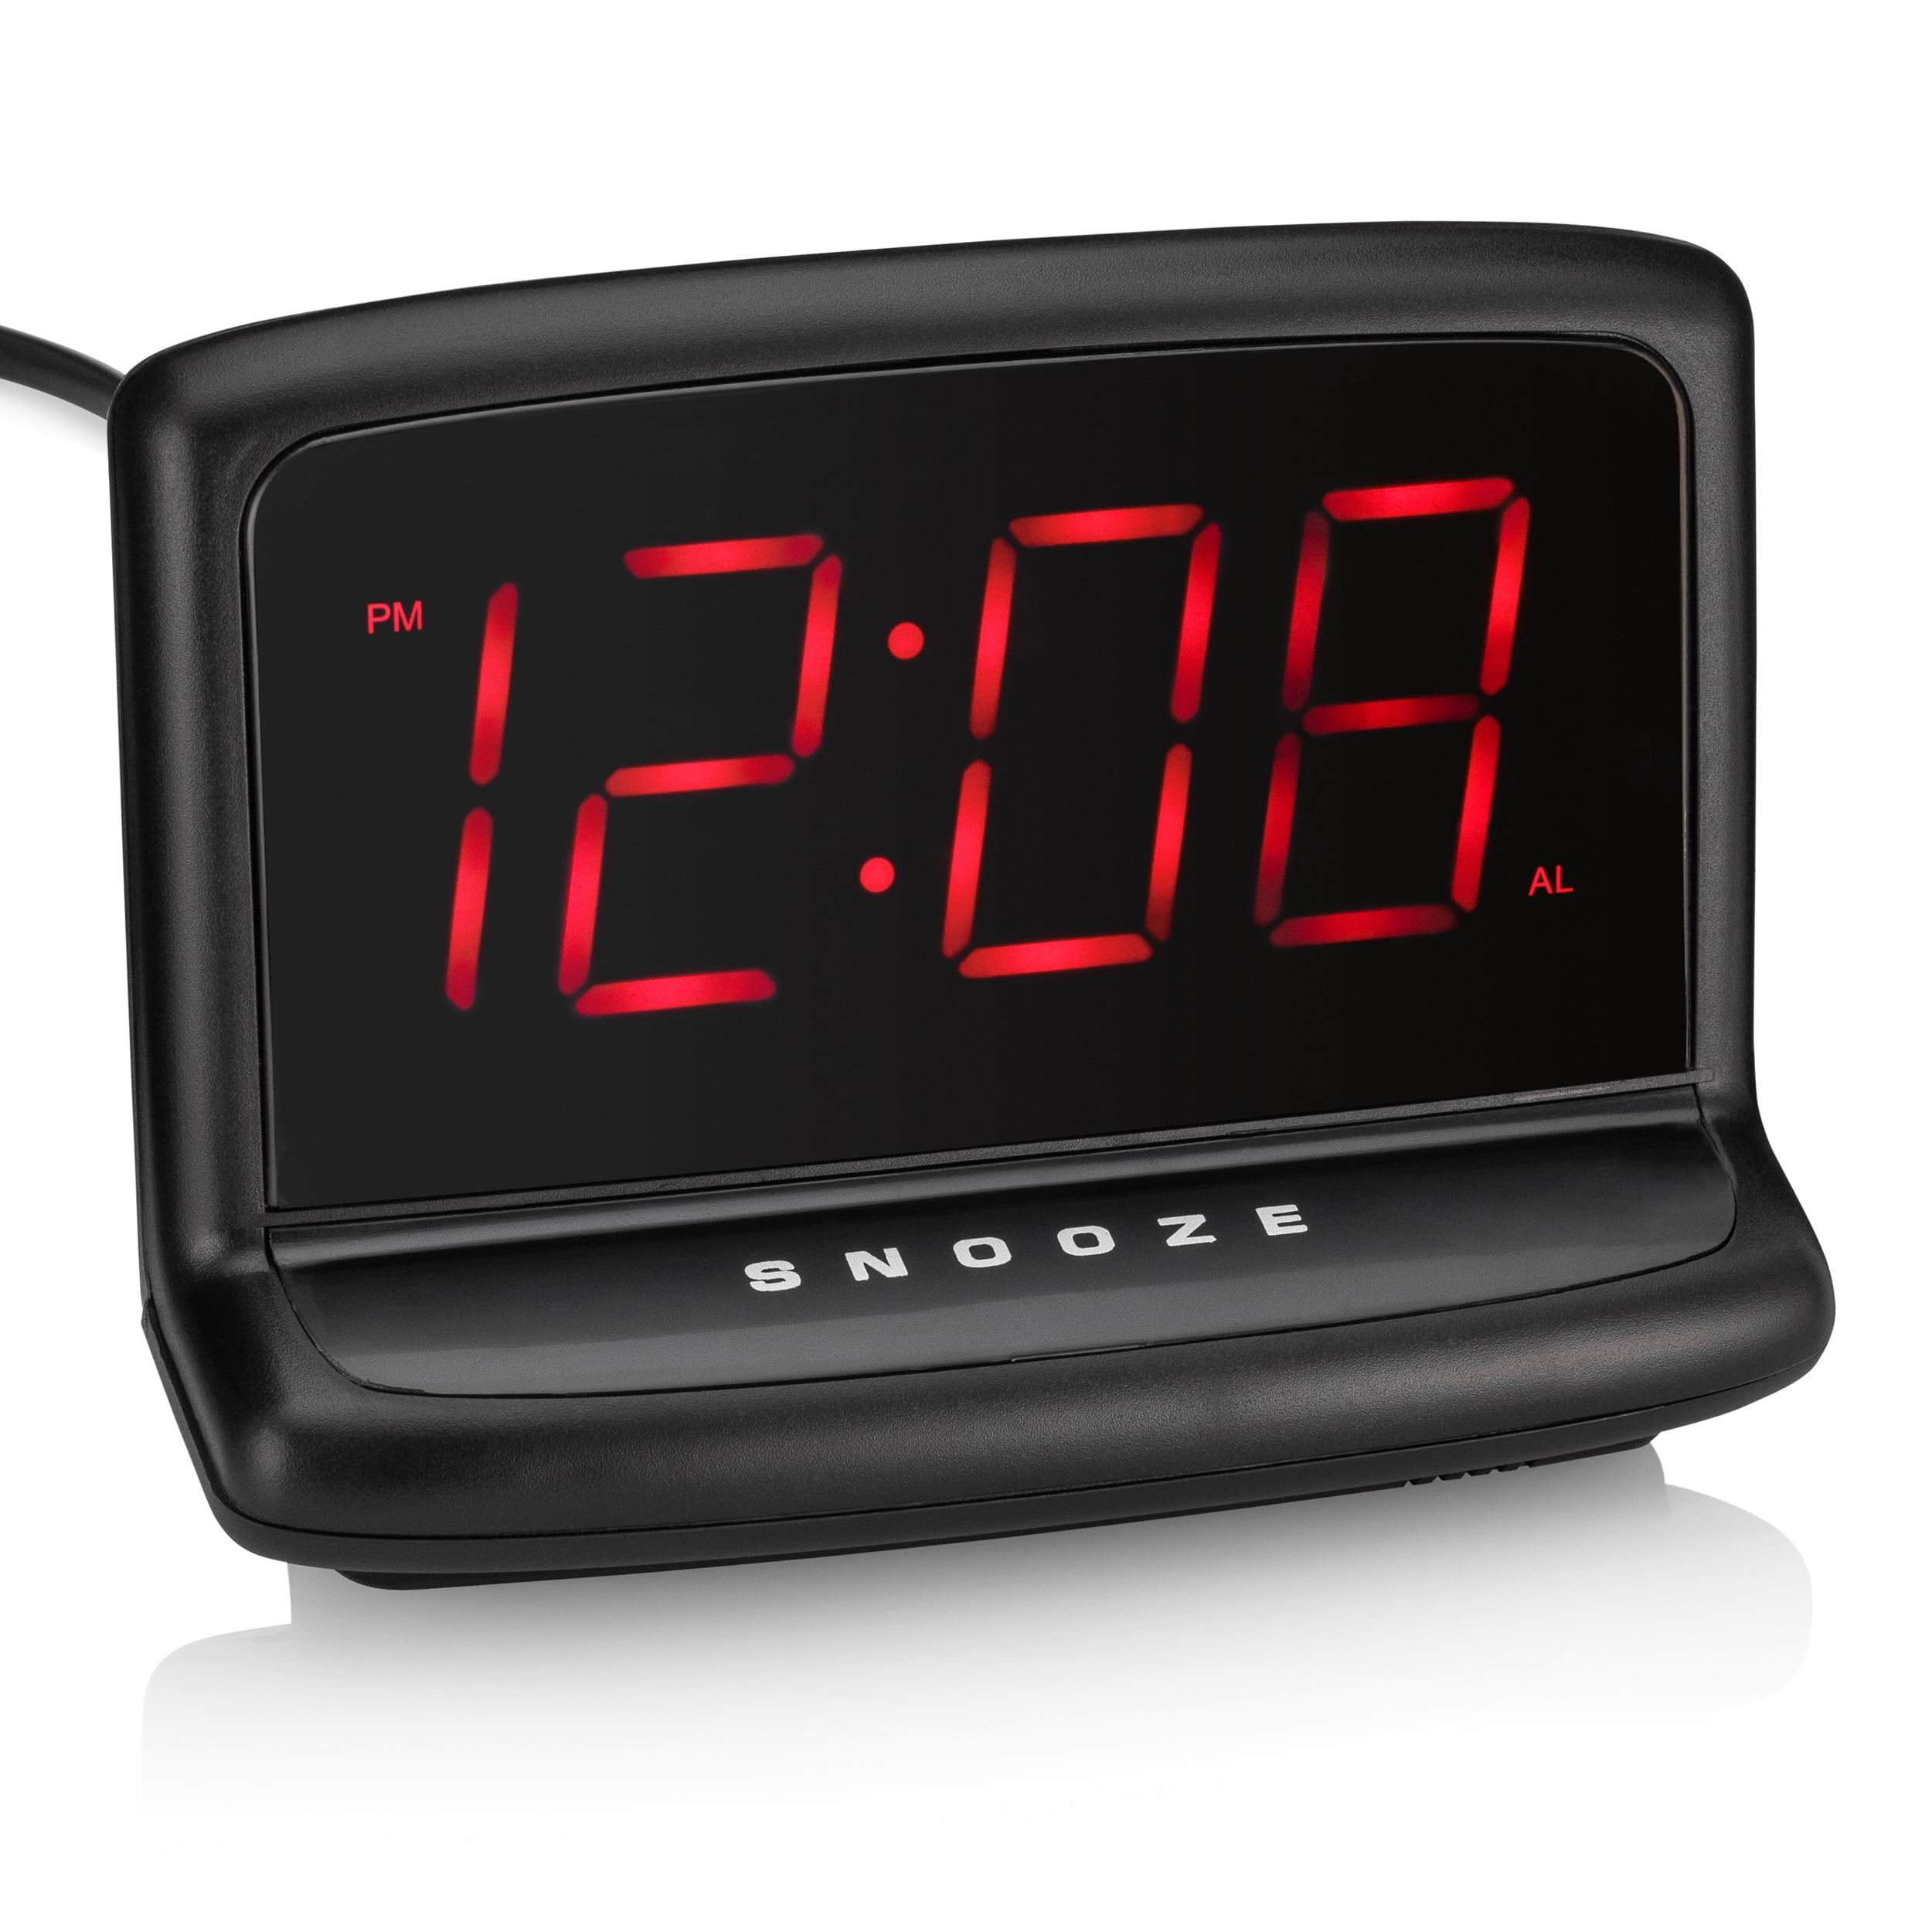 Mainstays Digital Alarm Clock with Back light on Demand – Model 